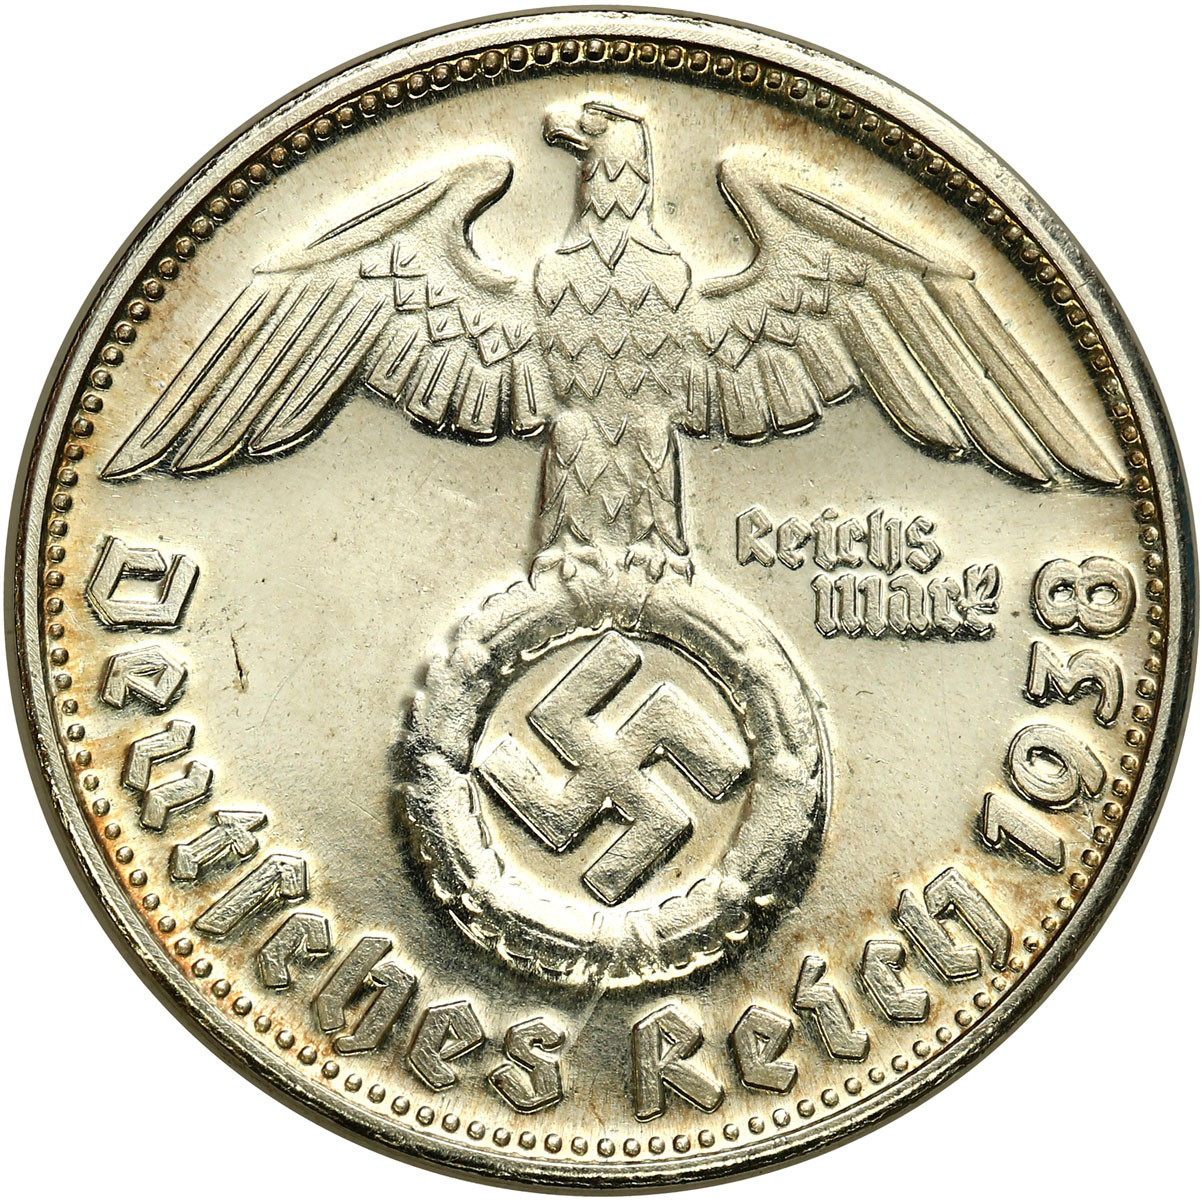 Niemcy, III Rzesza. Medal A. Hitler 1938, srebro